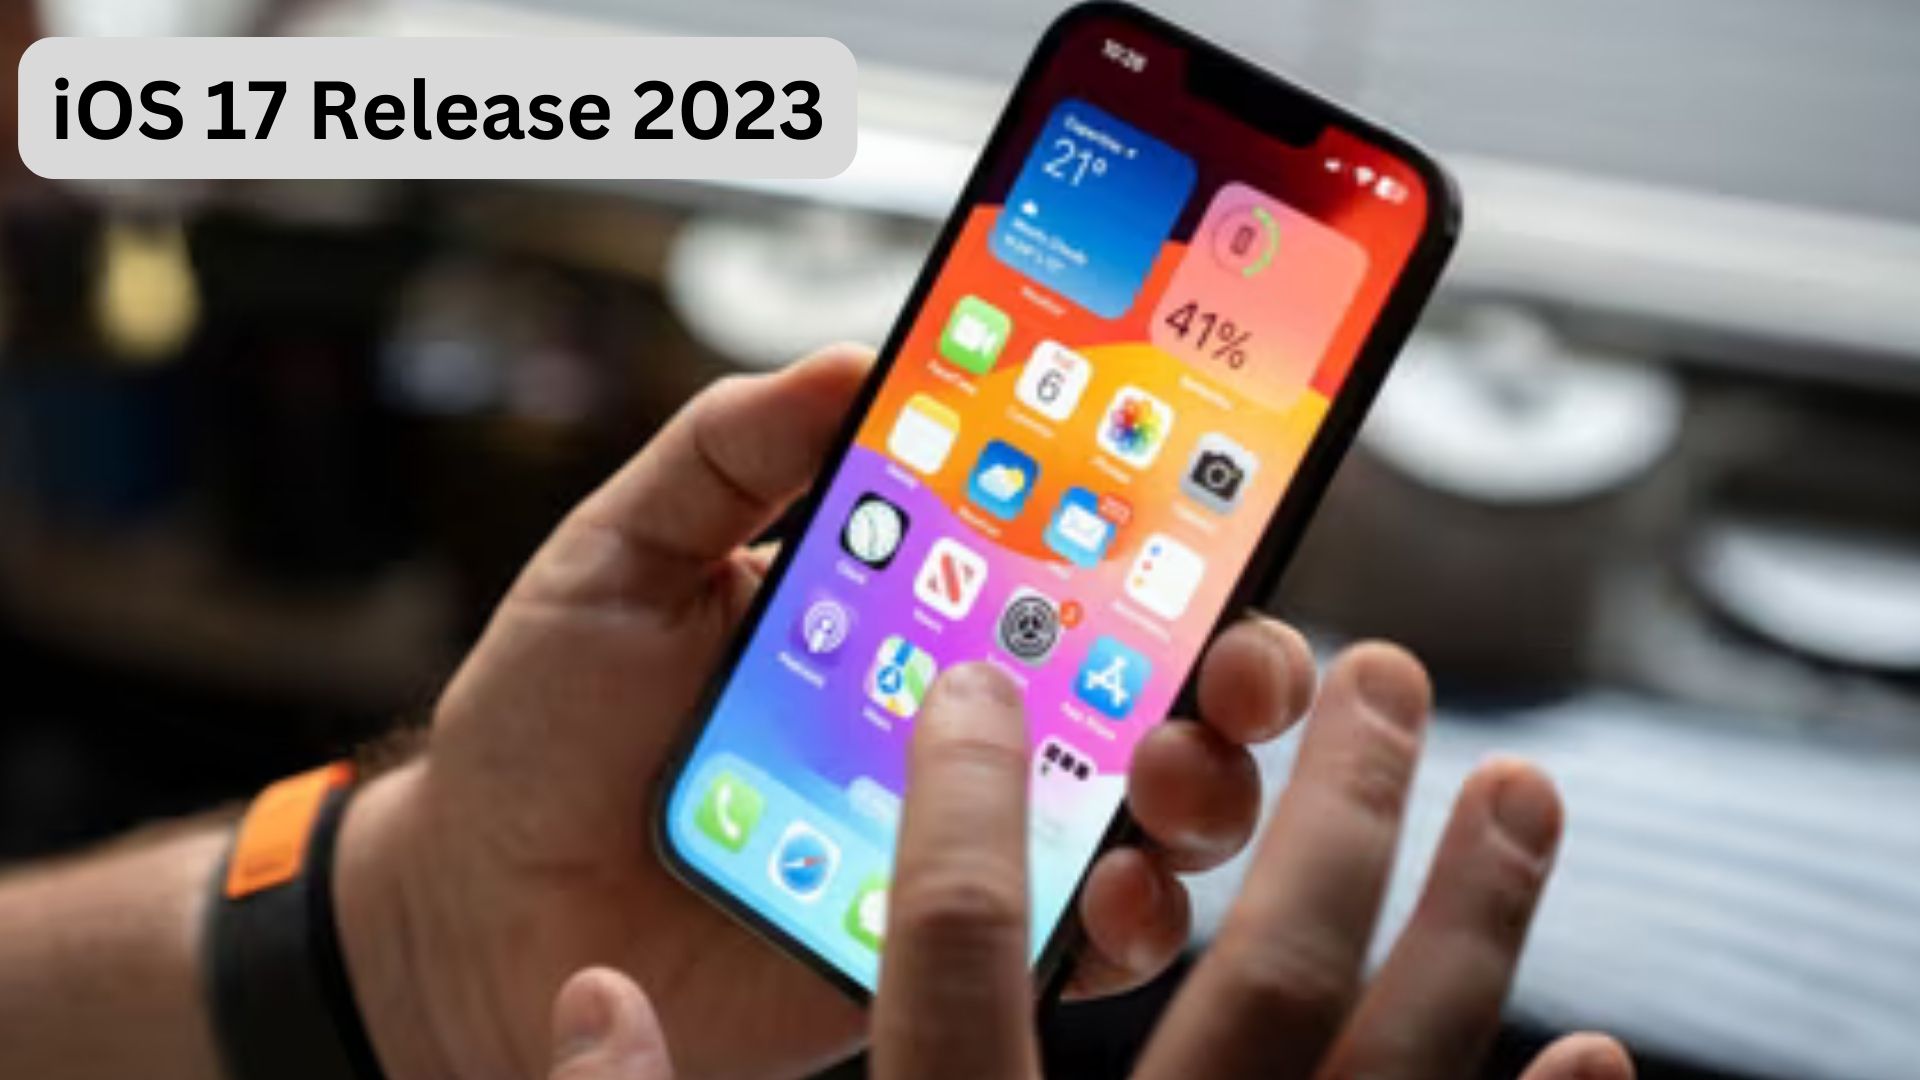 iOS 17 Release 2023